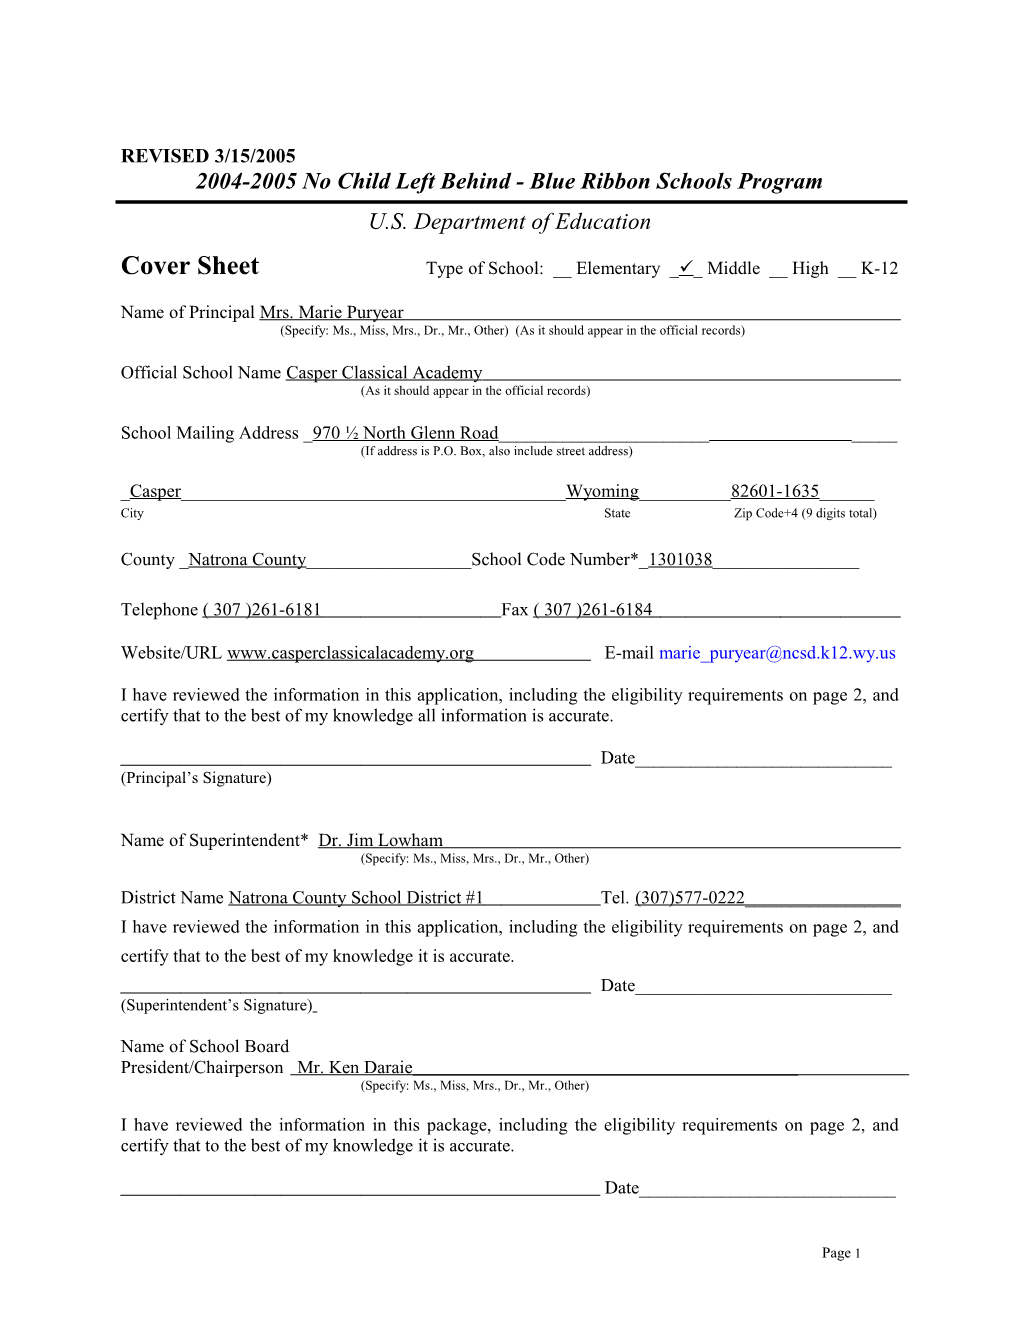 Casper Classical Academy Application: 2004-2005, No Child Left Behind - Blue Ribbon Schools